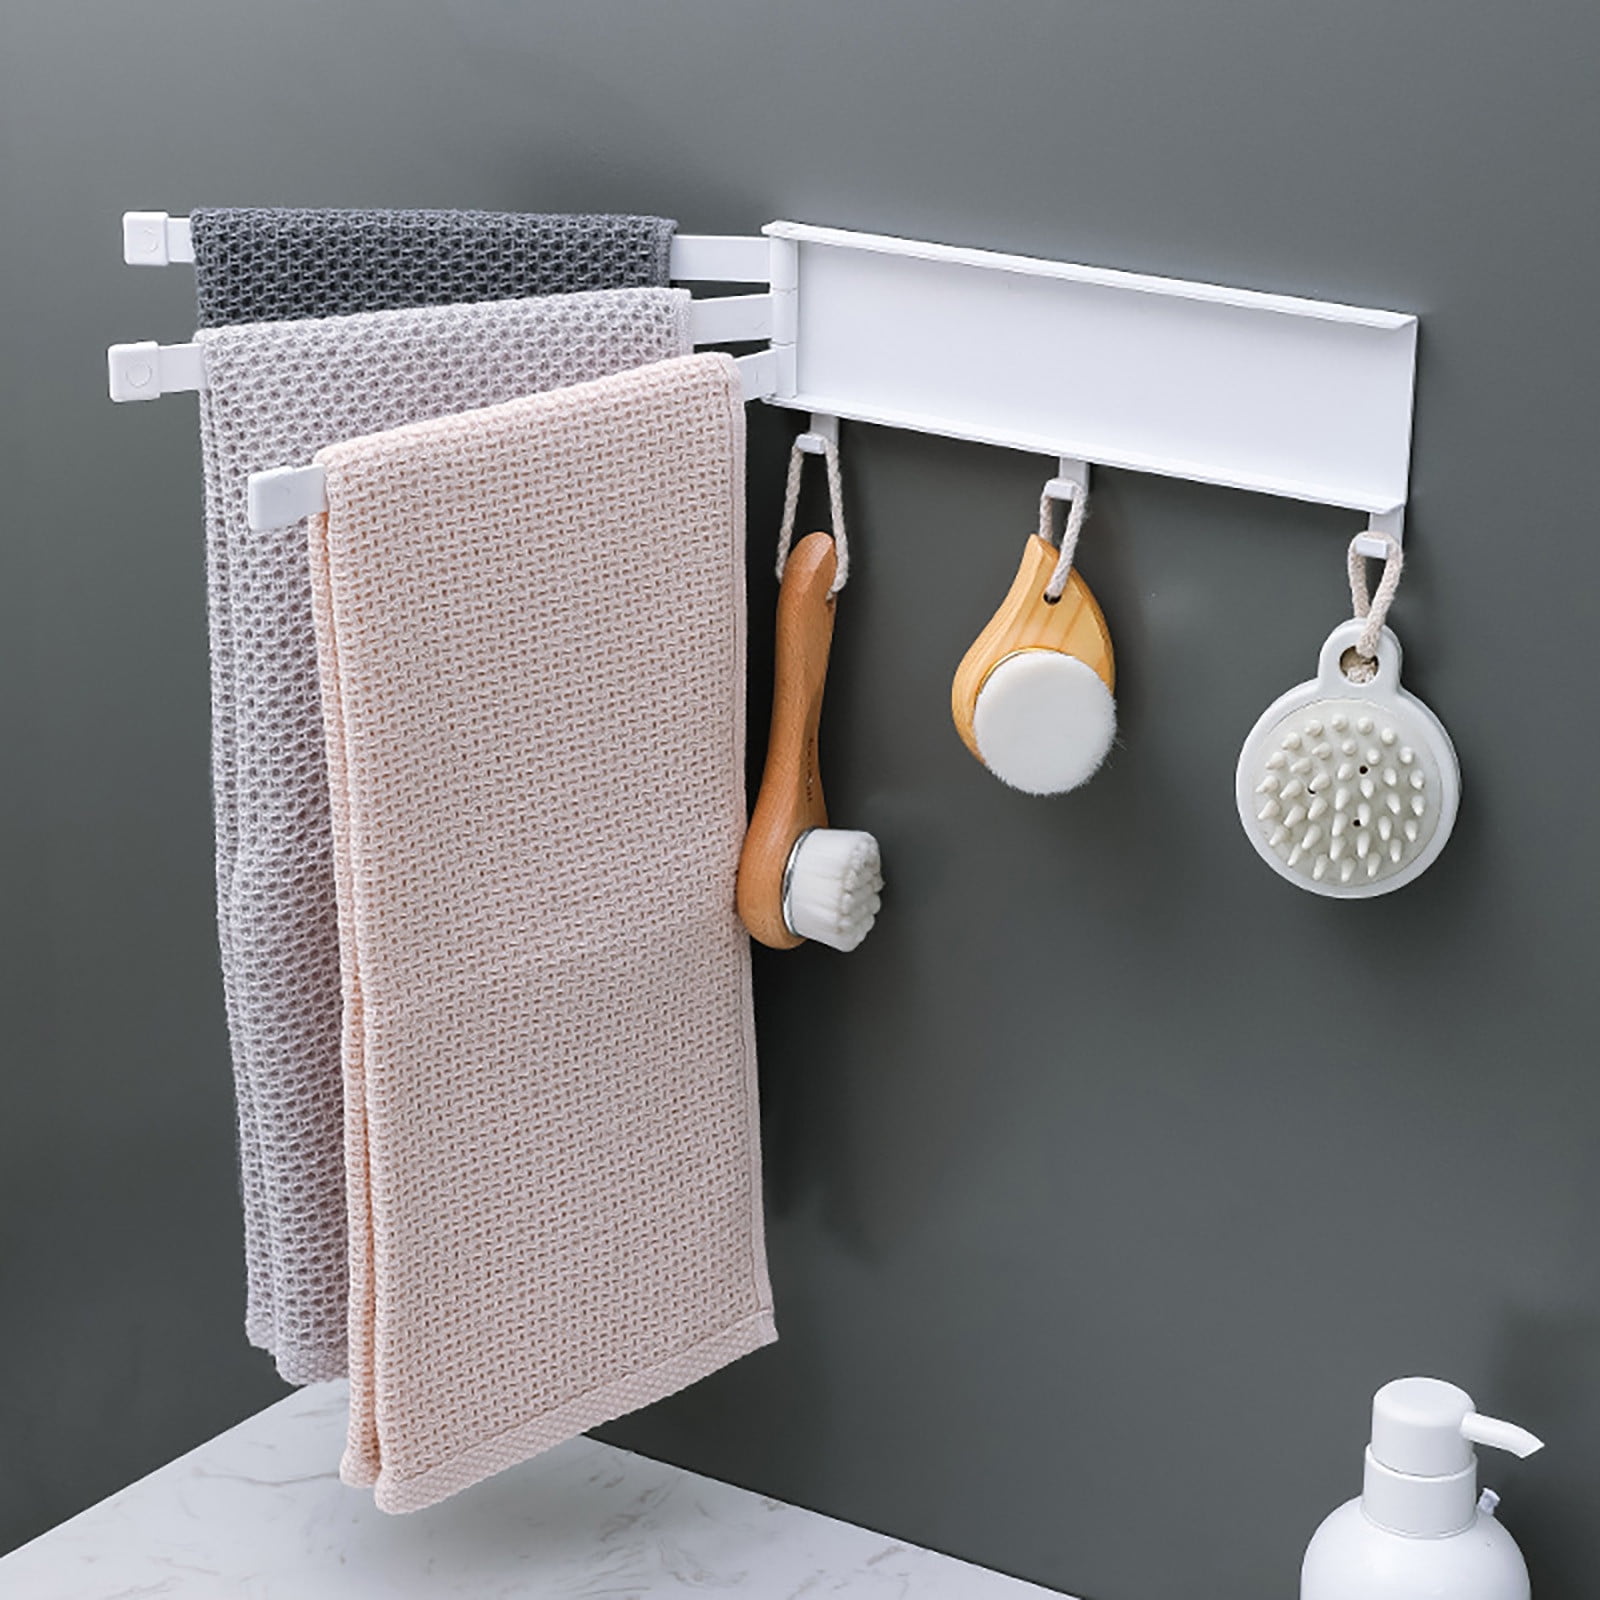 4-Layer Rotary Towel Rack Holder Swivel kitchen Bathroom Wall Towel Rack Shelf